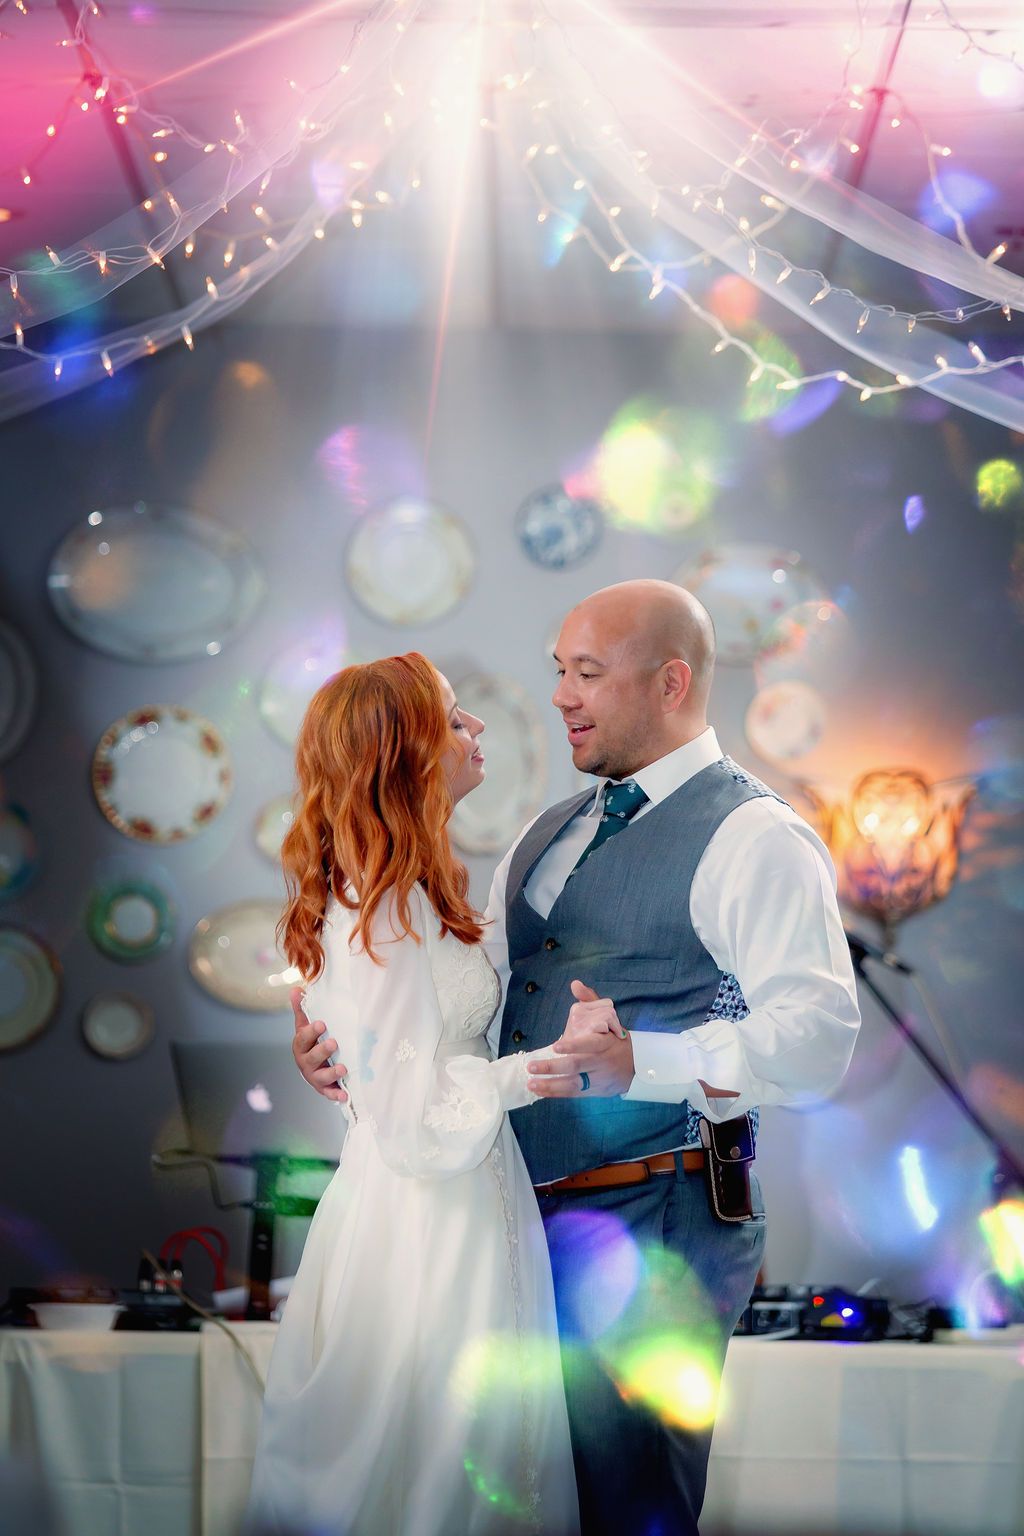 Stonegate Manor & Gardens Michigan wedding venue - wedding couple dancing under bright lights by dj table